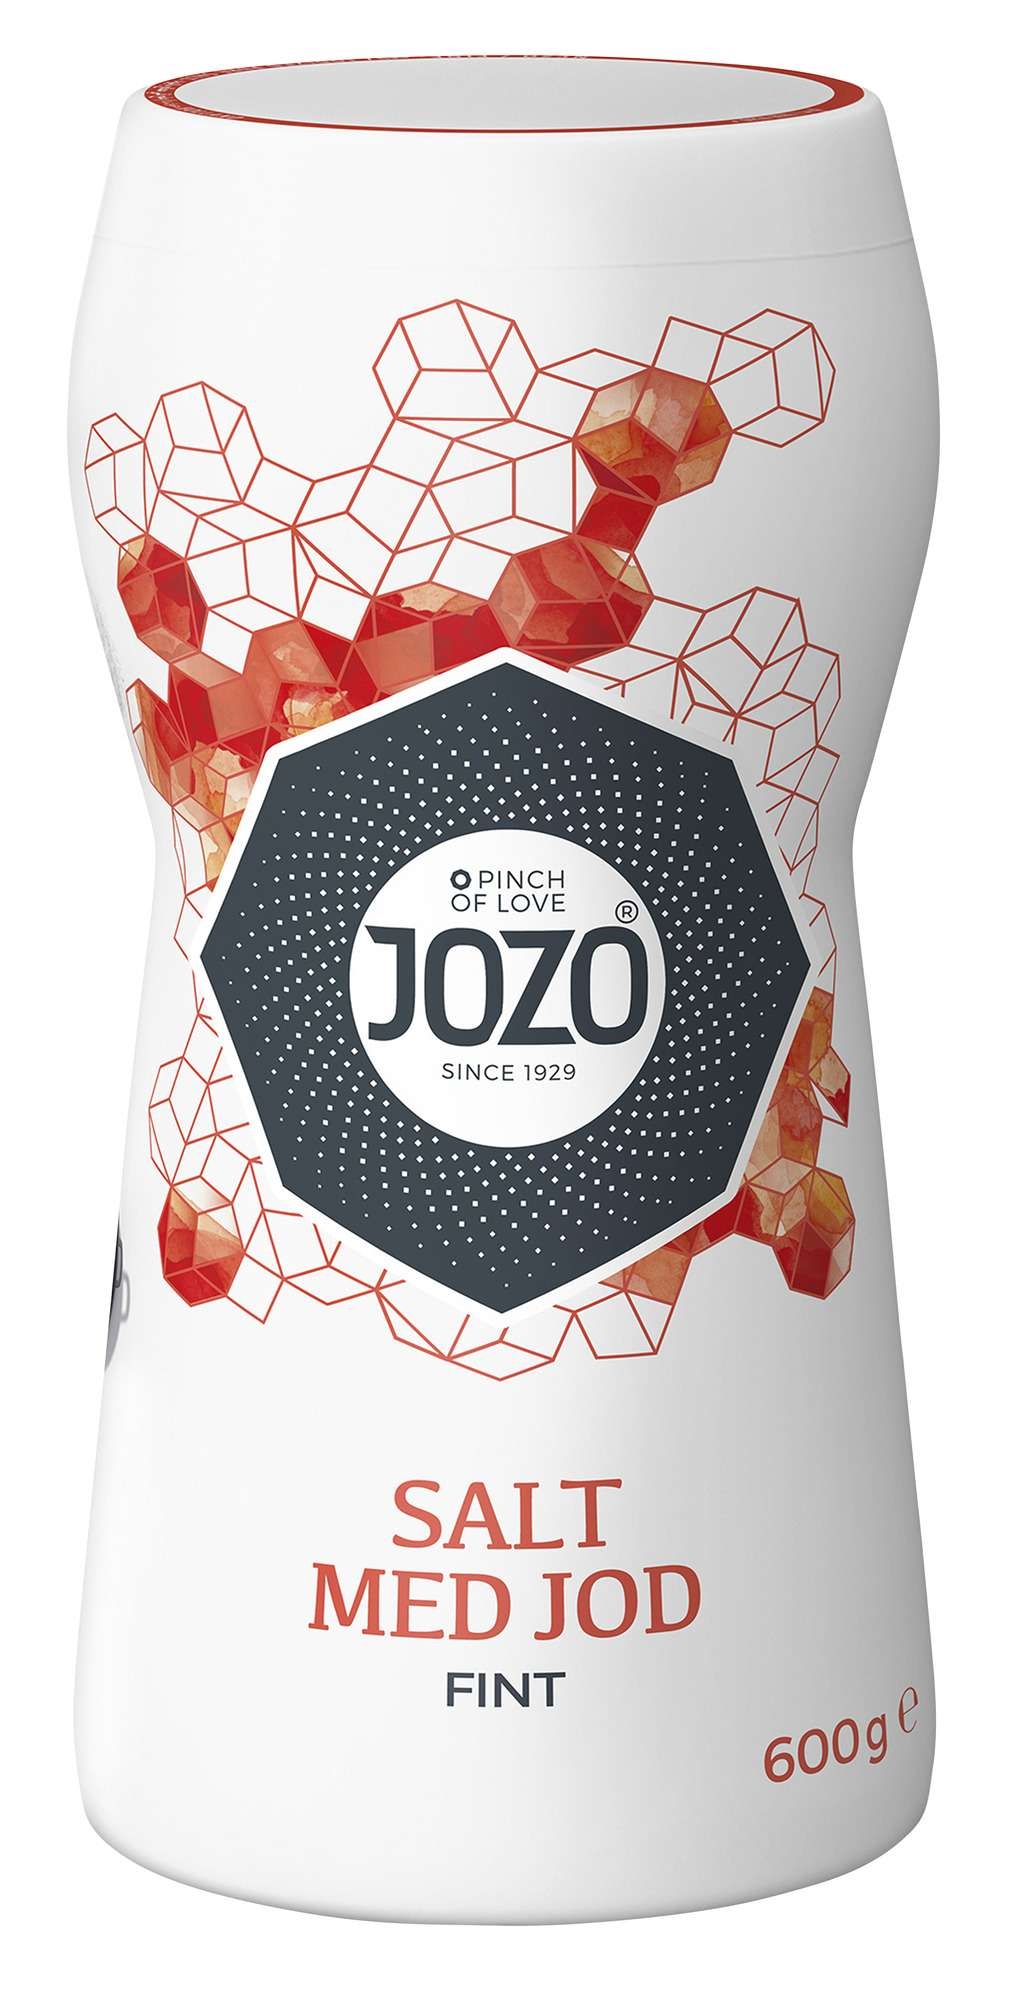 Jozo salt m/jod bx      600g